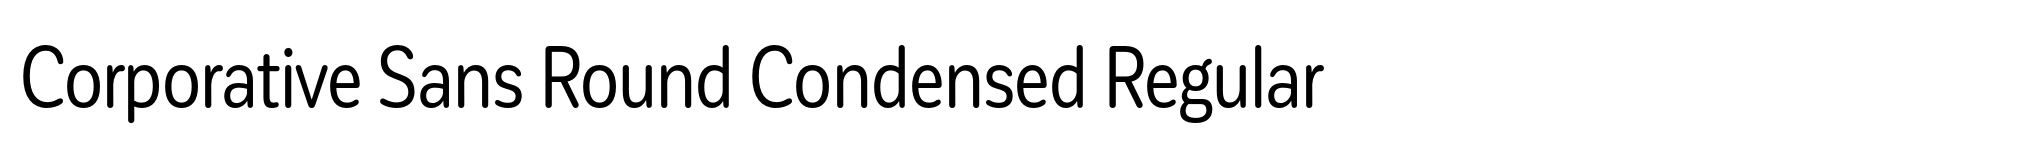 Corporative Sans Round Condensed Regular image